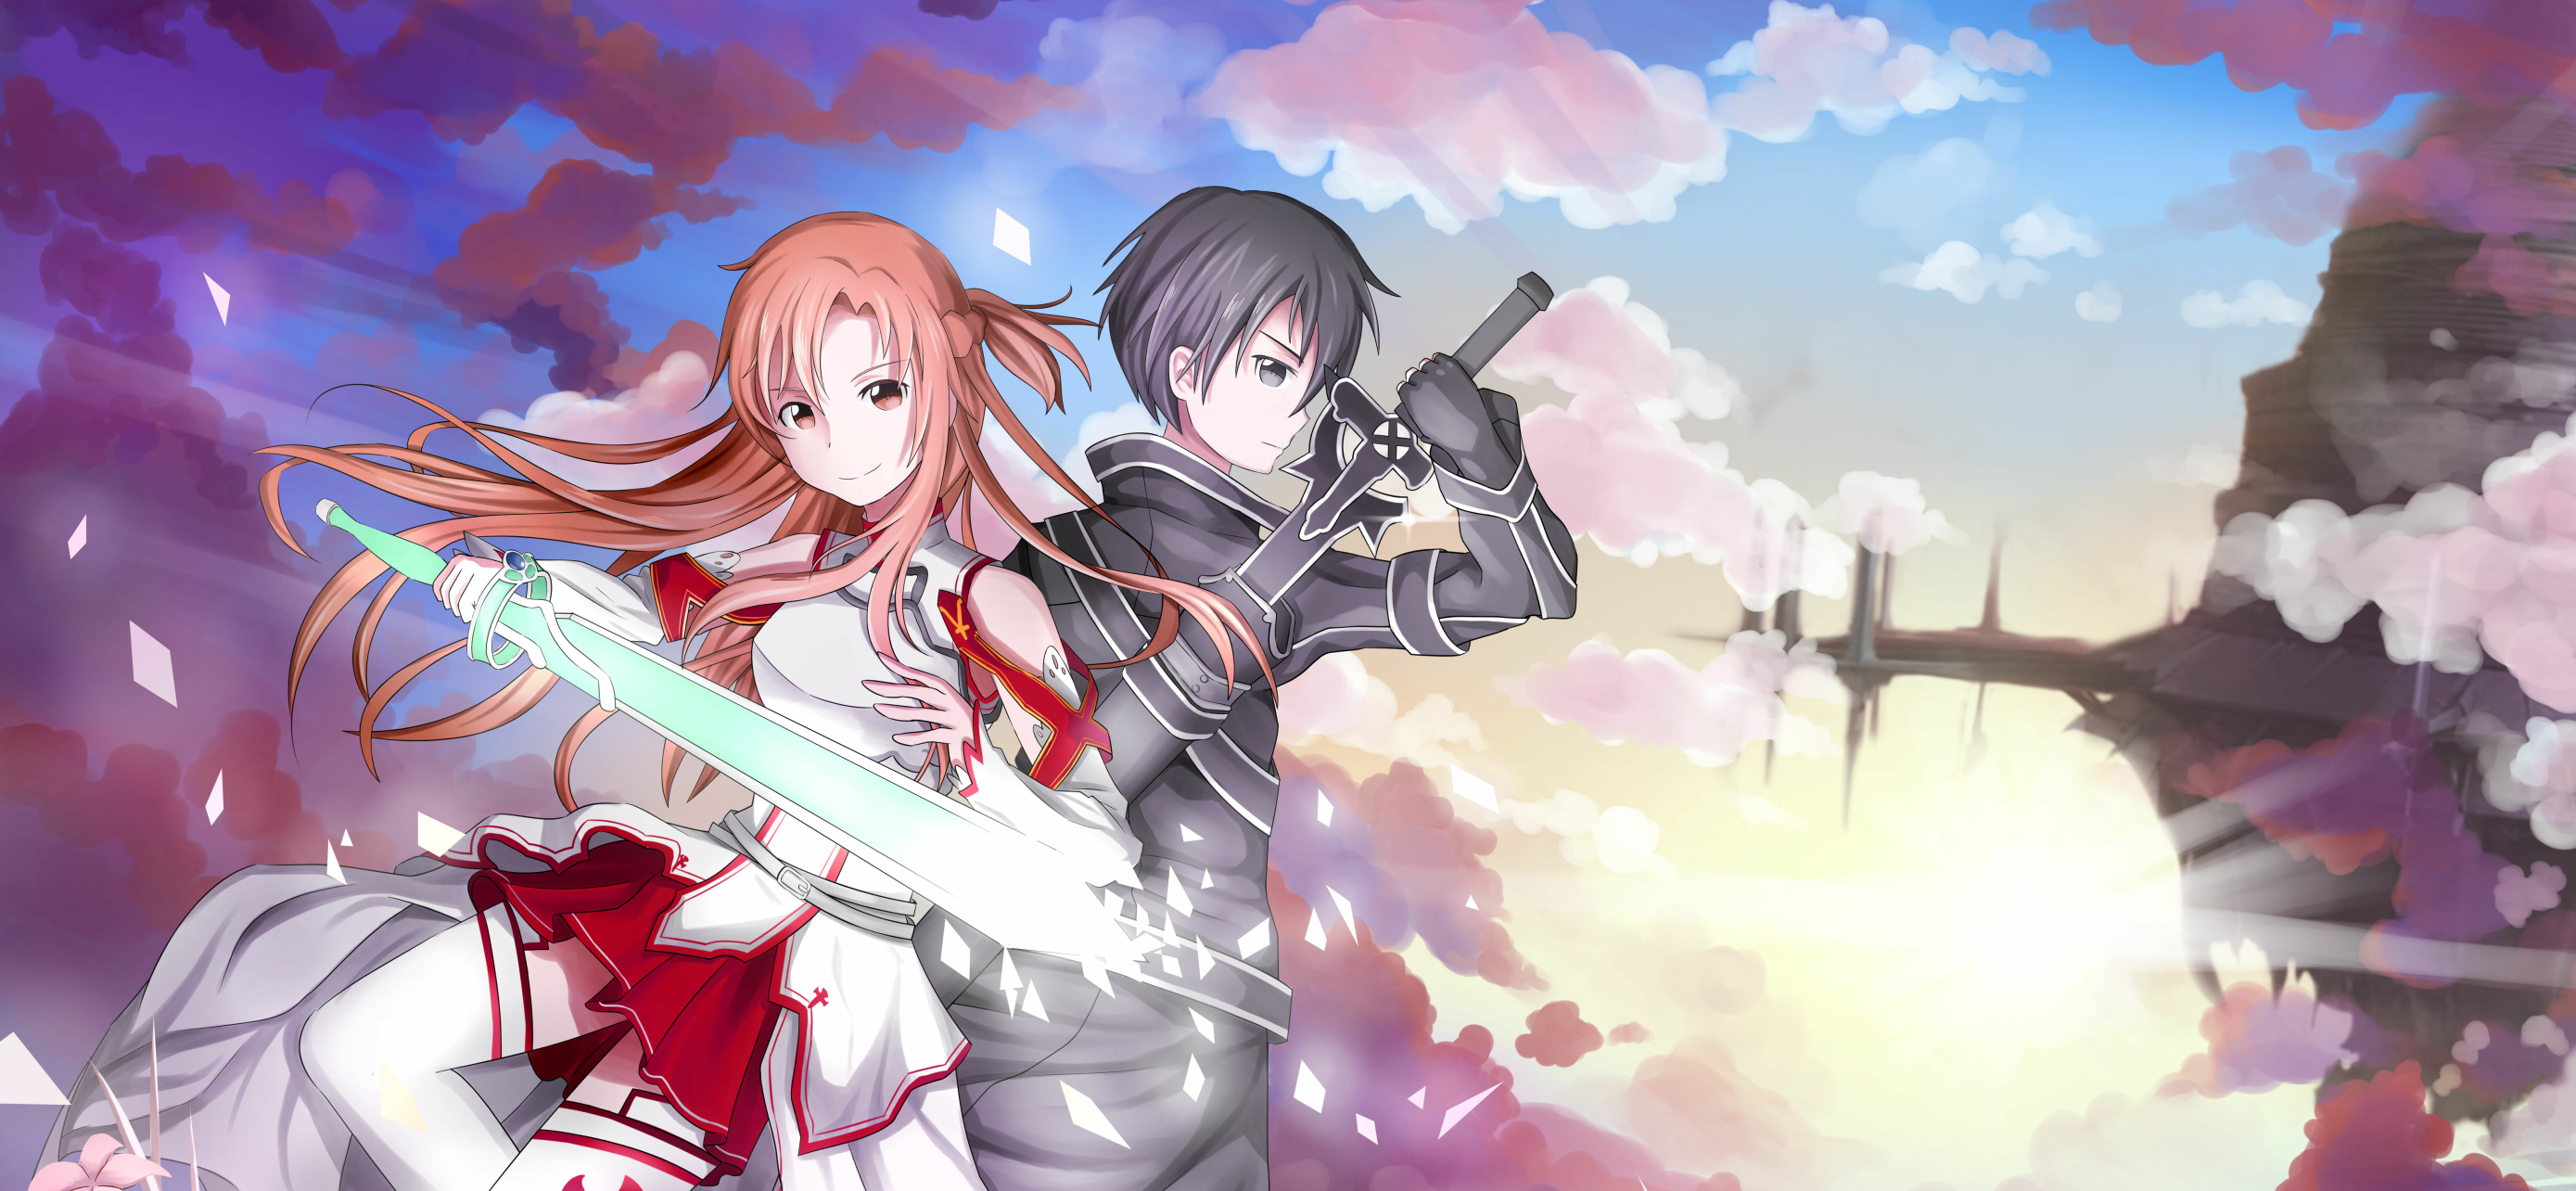 Wallpaper Anime, sword art online, kirito, Sword Art Online, Asuna, SAO, sword  art online for mobile and desktop, section сёнэн, resolution 2560x1875 -  download